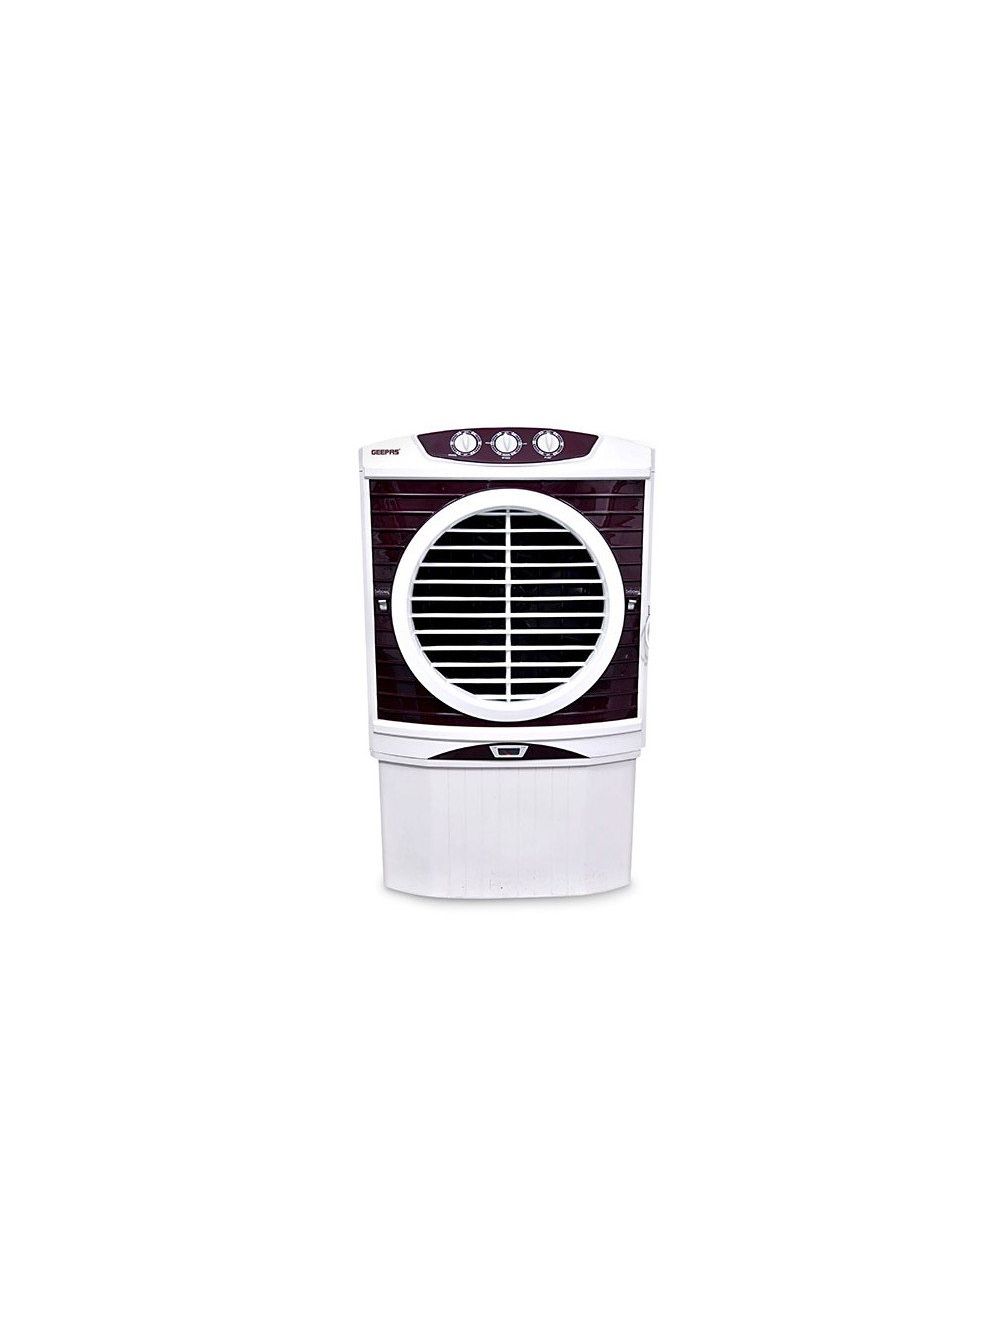 Geepas GAC9603 Air Cooler